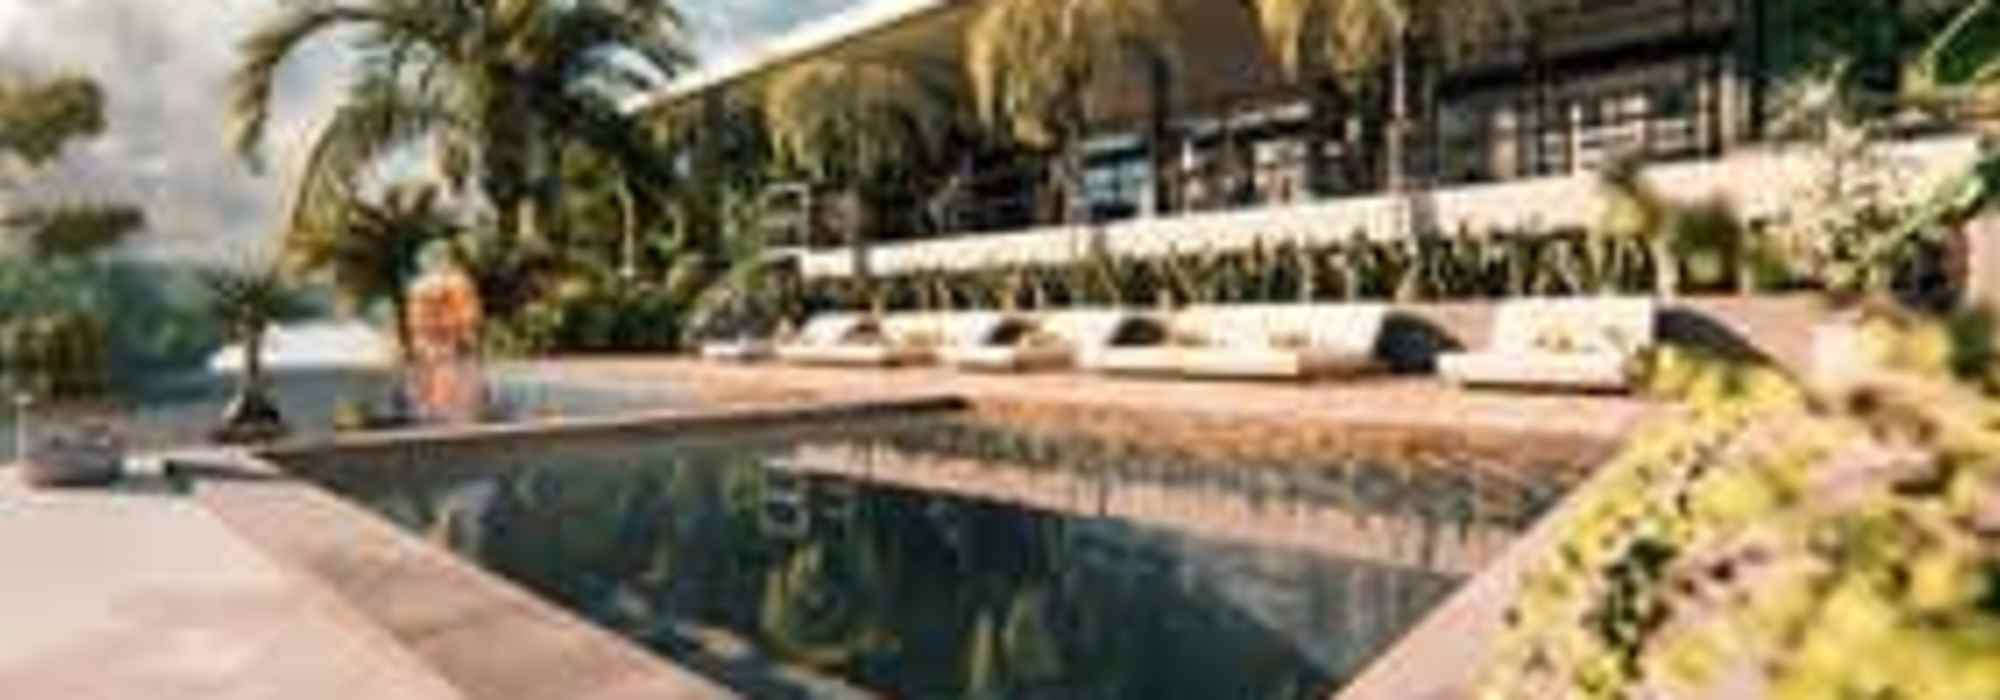 For Sale House in Bali Wellness Escazu Guachipelin